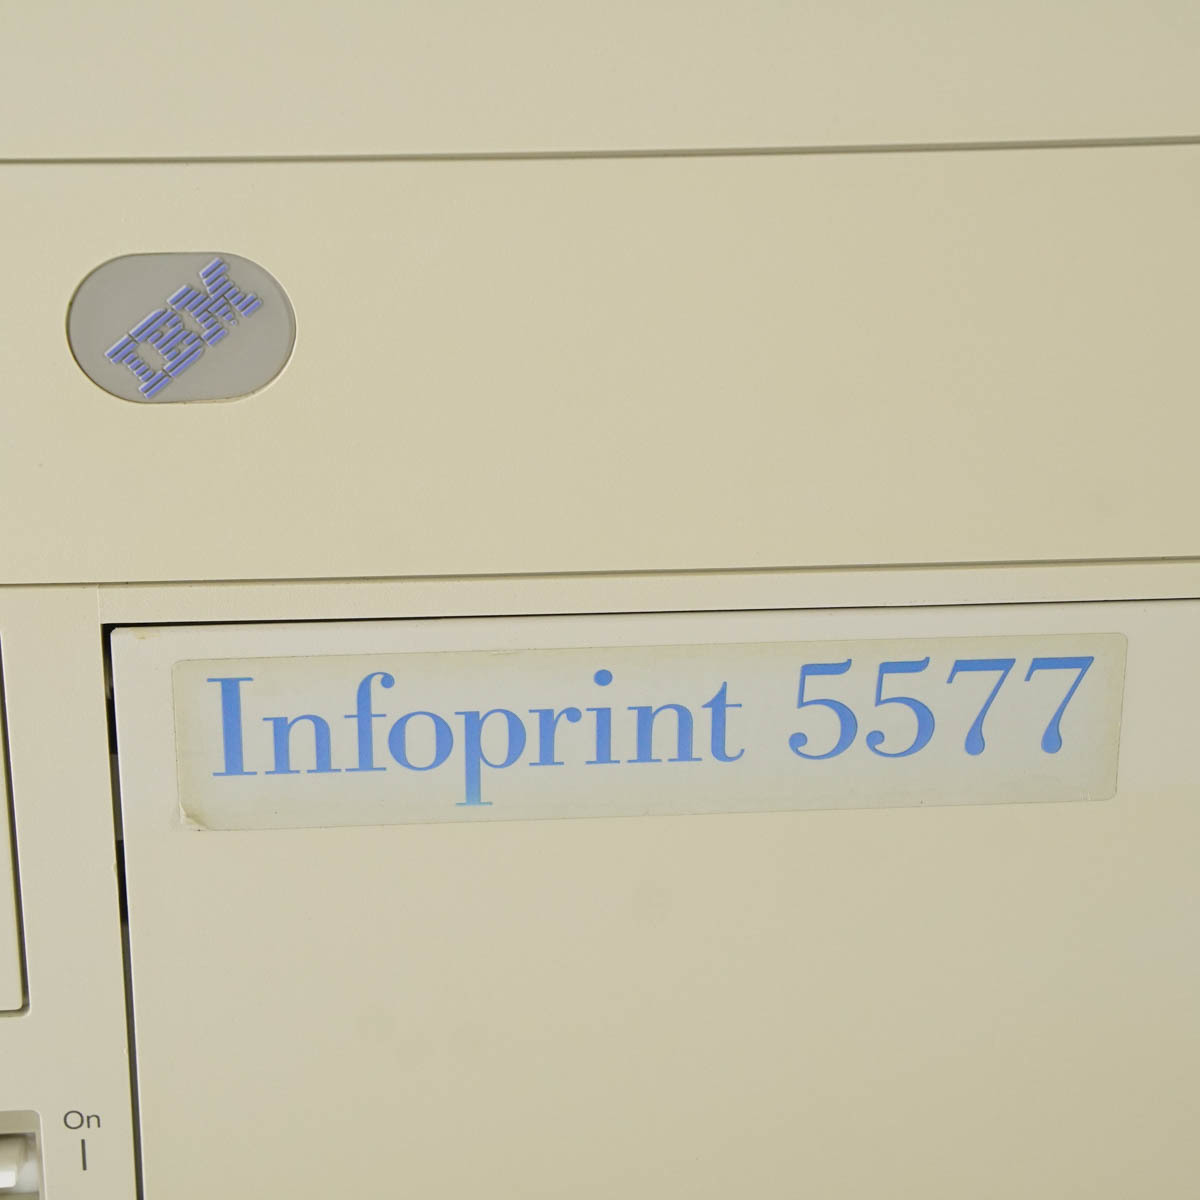 [JB] 現状販売 5577-D02 Infoprint 5577 IBM アイビーエム ドットインパクトプリンター[05344-0041]_画像5